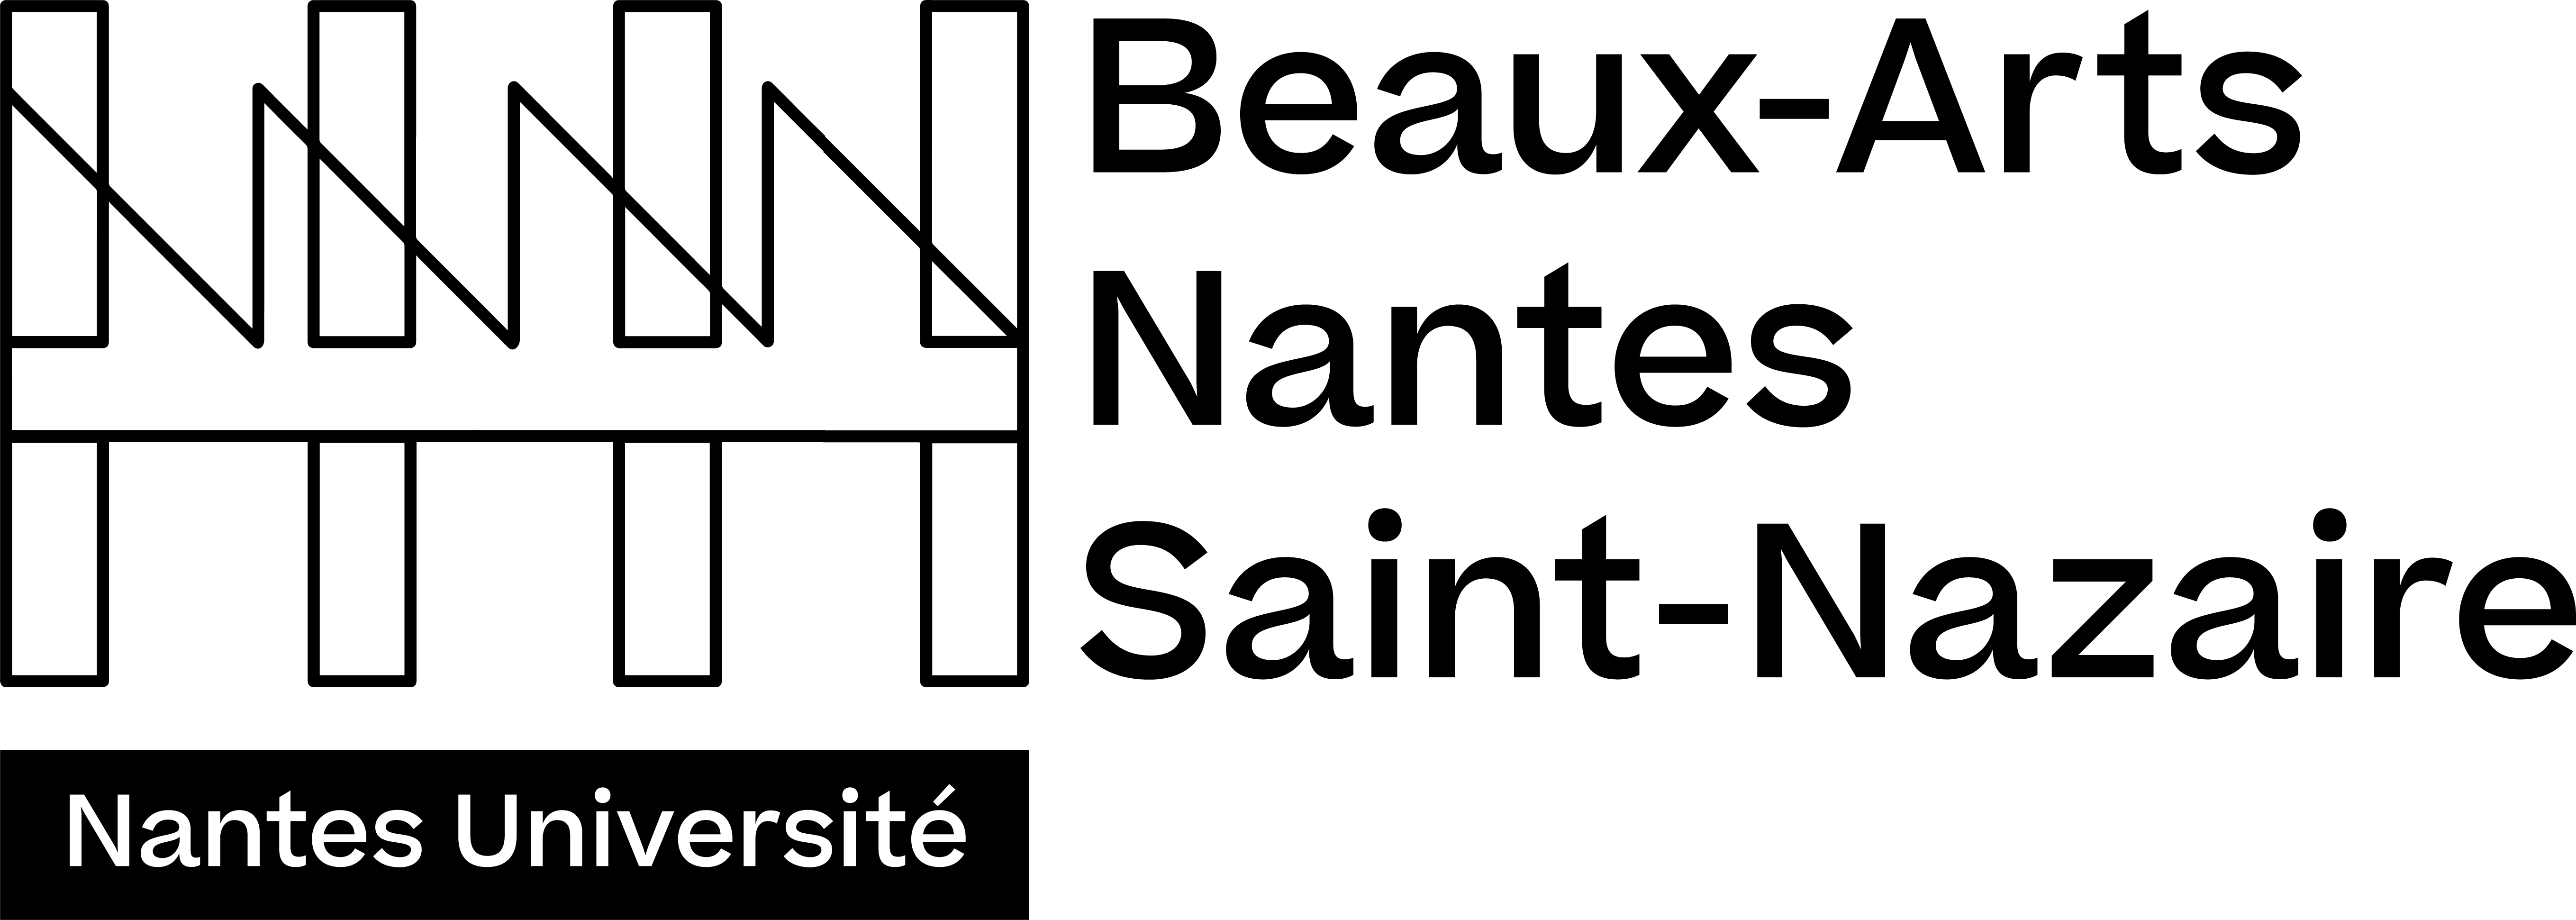 logo Beaux-Arts